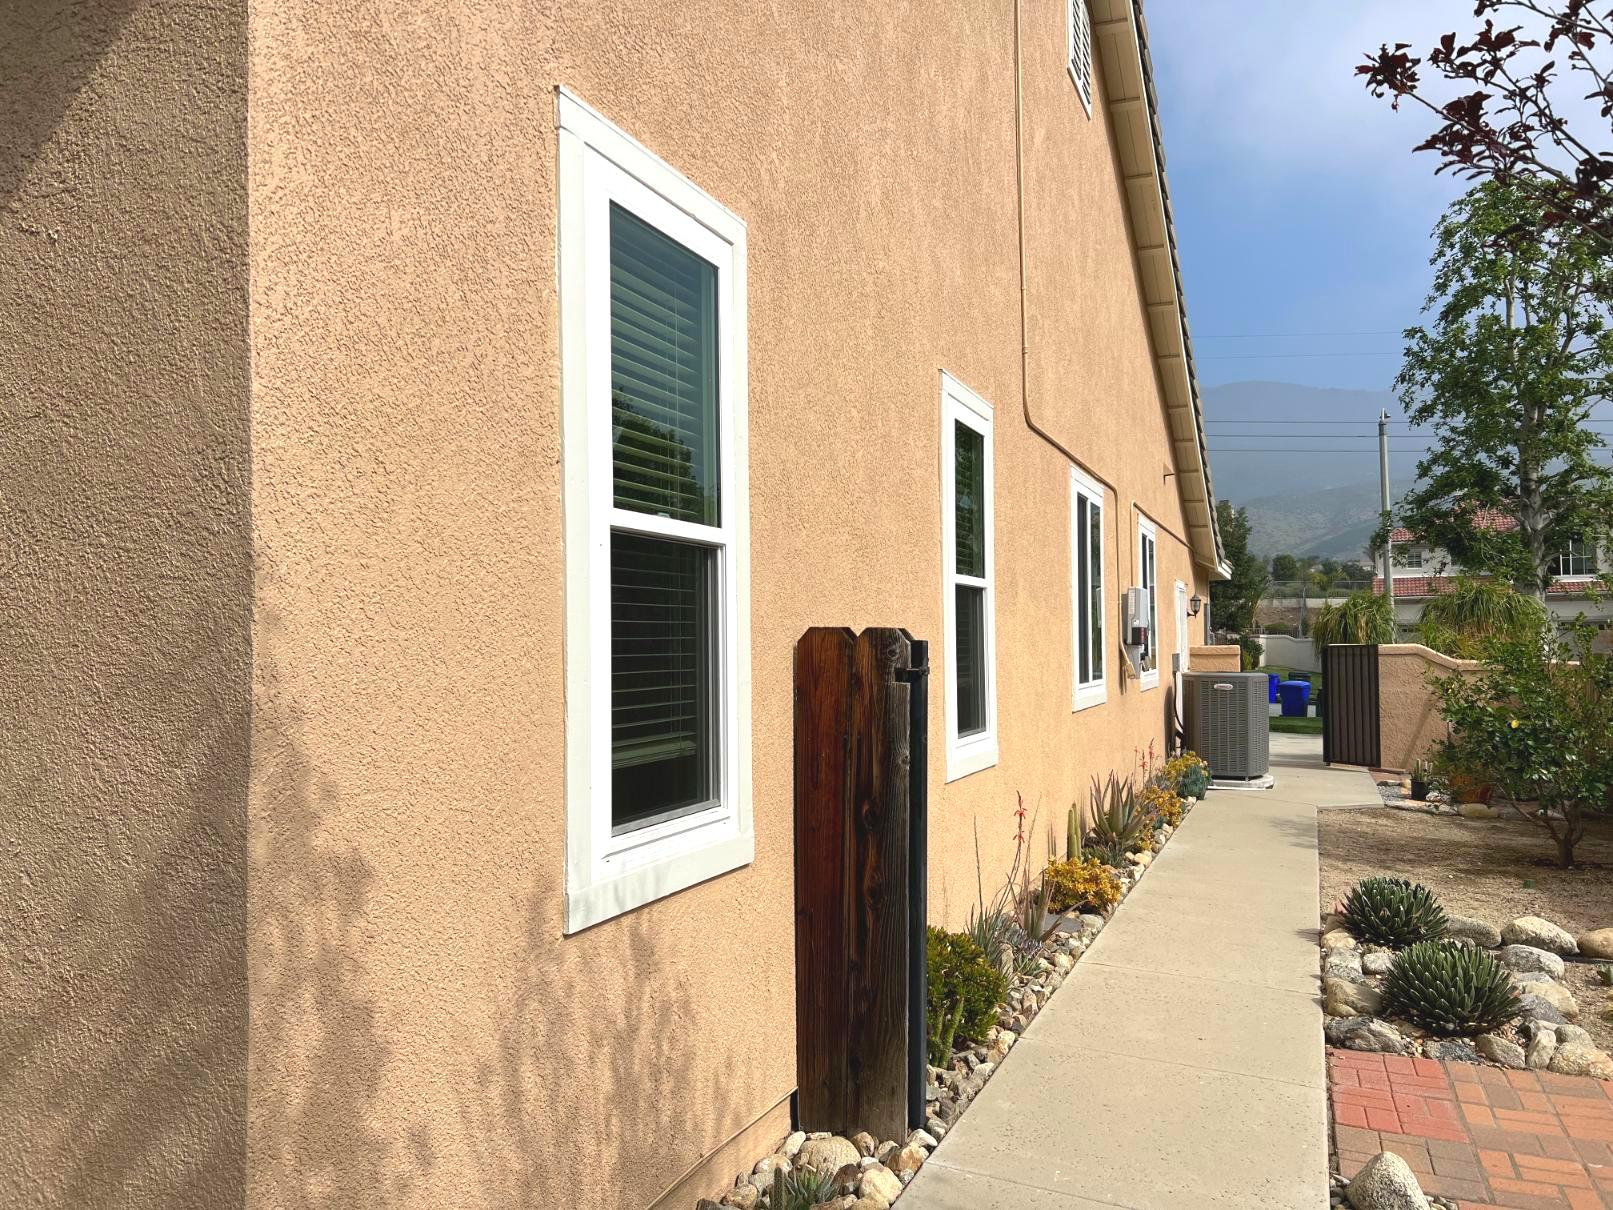 Window Installation in Rancho Cucamonga, CA